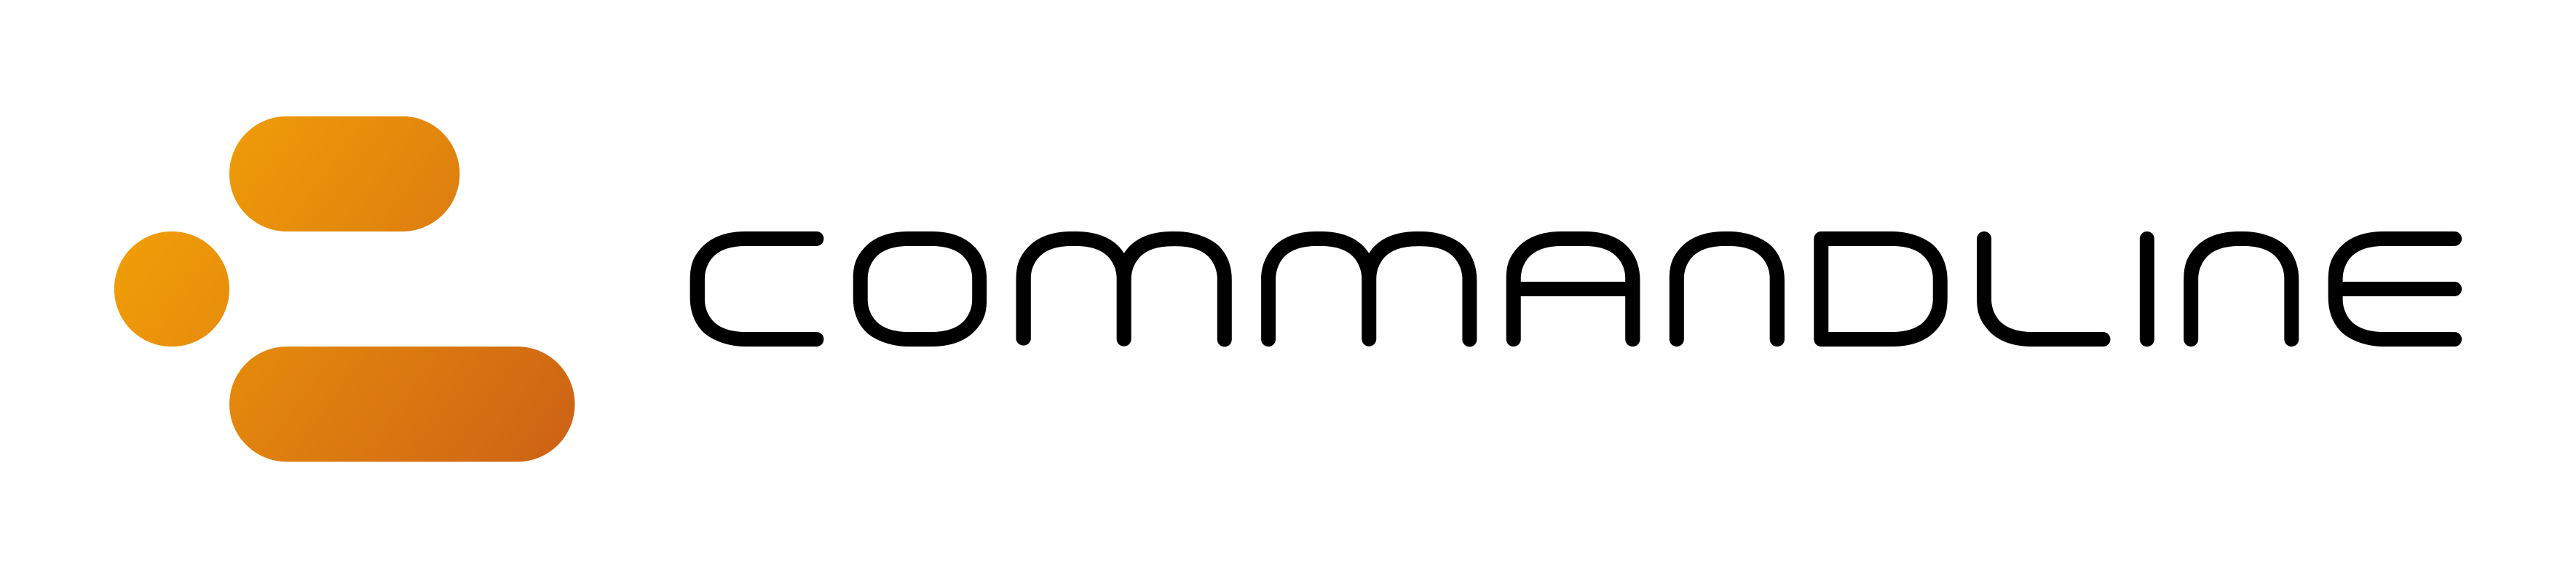 Commandline logo